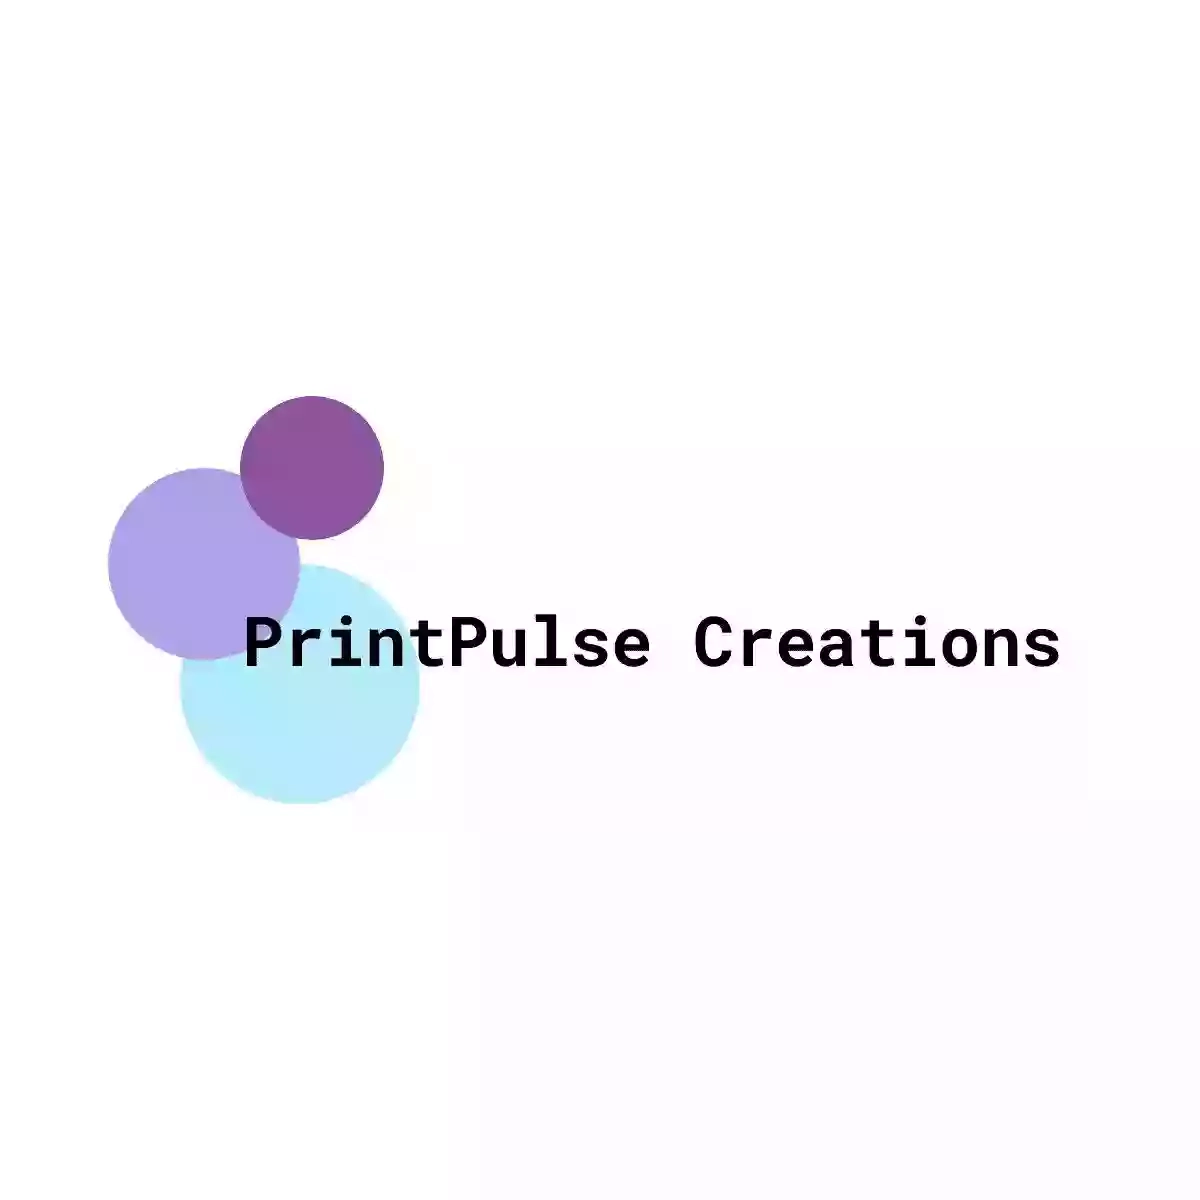 PrintPulse Creations